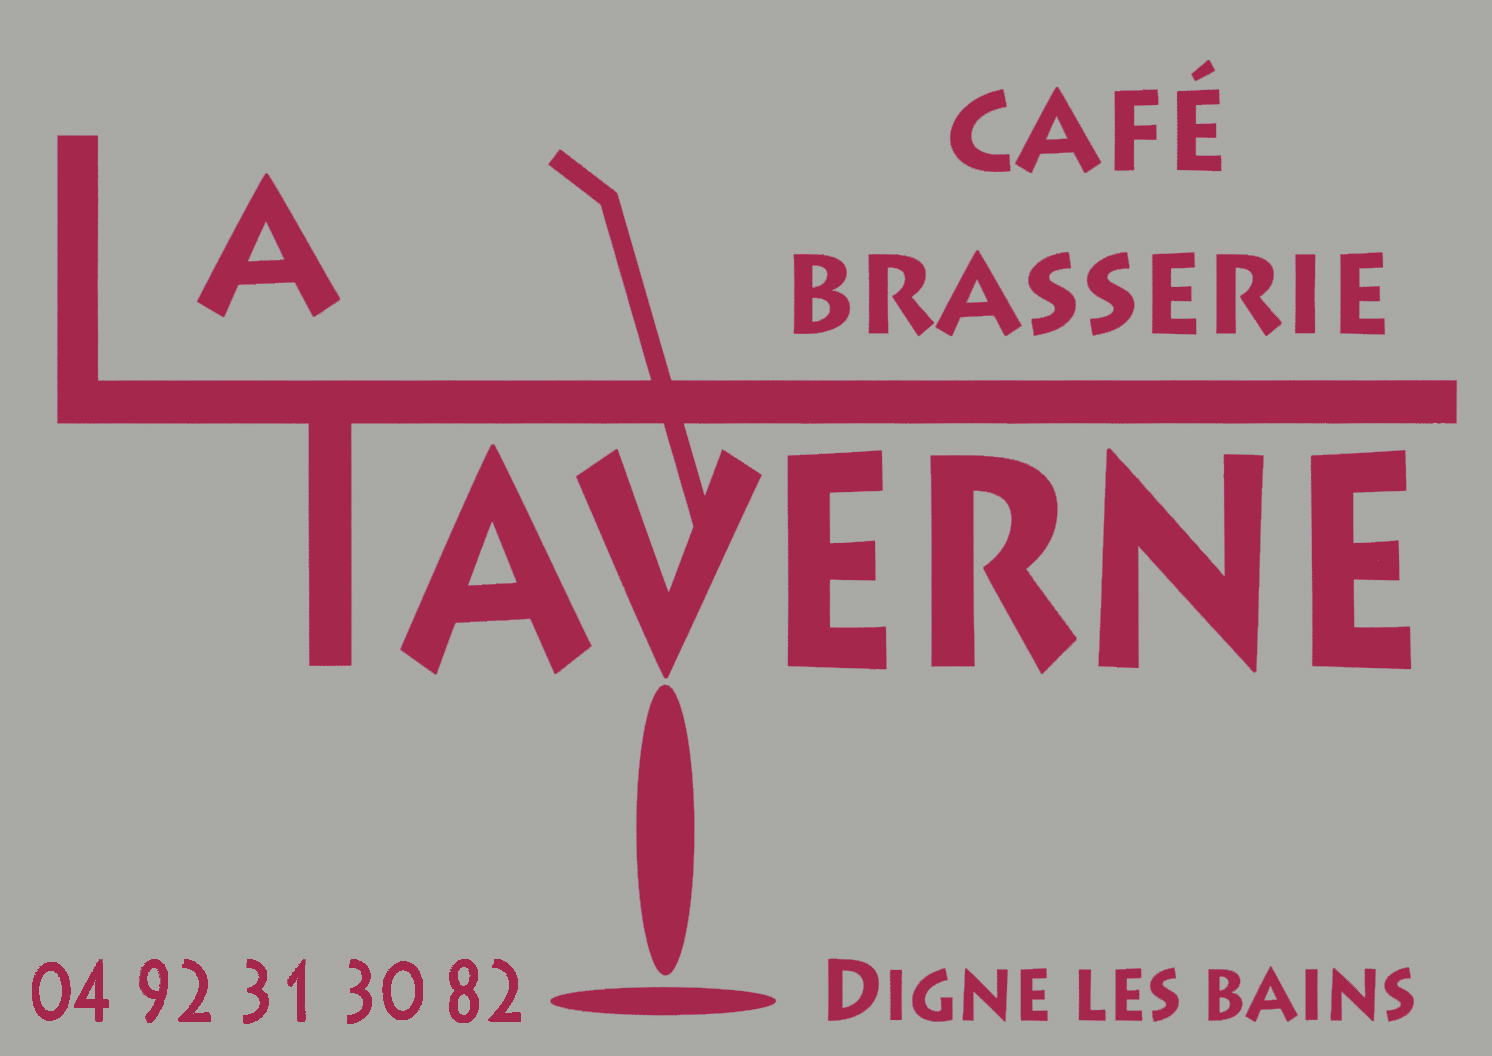 La Taverne logo